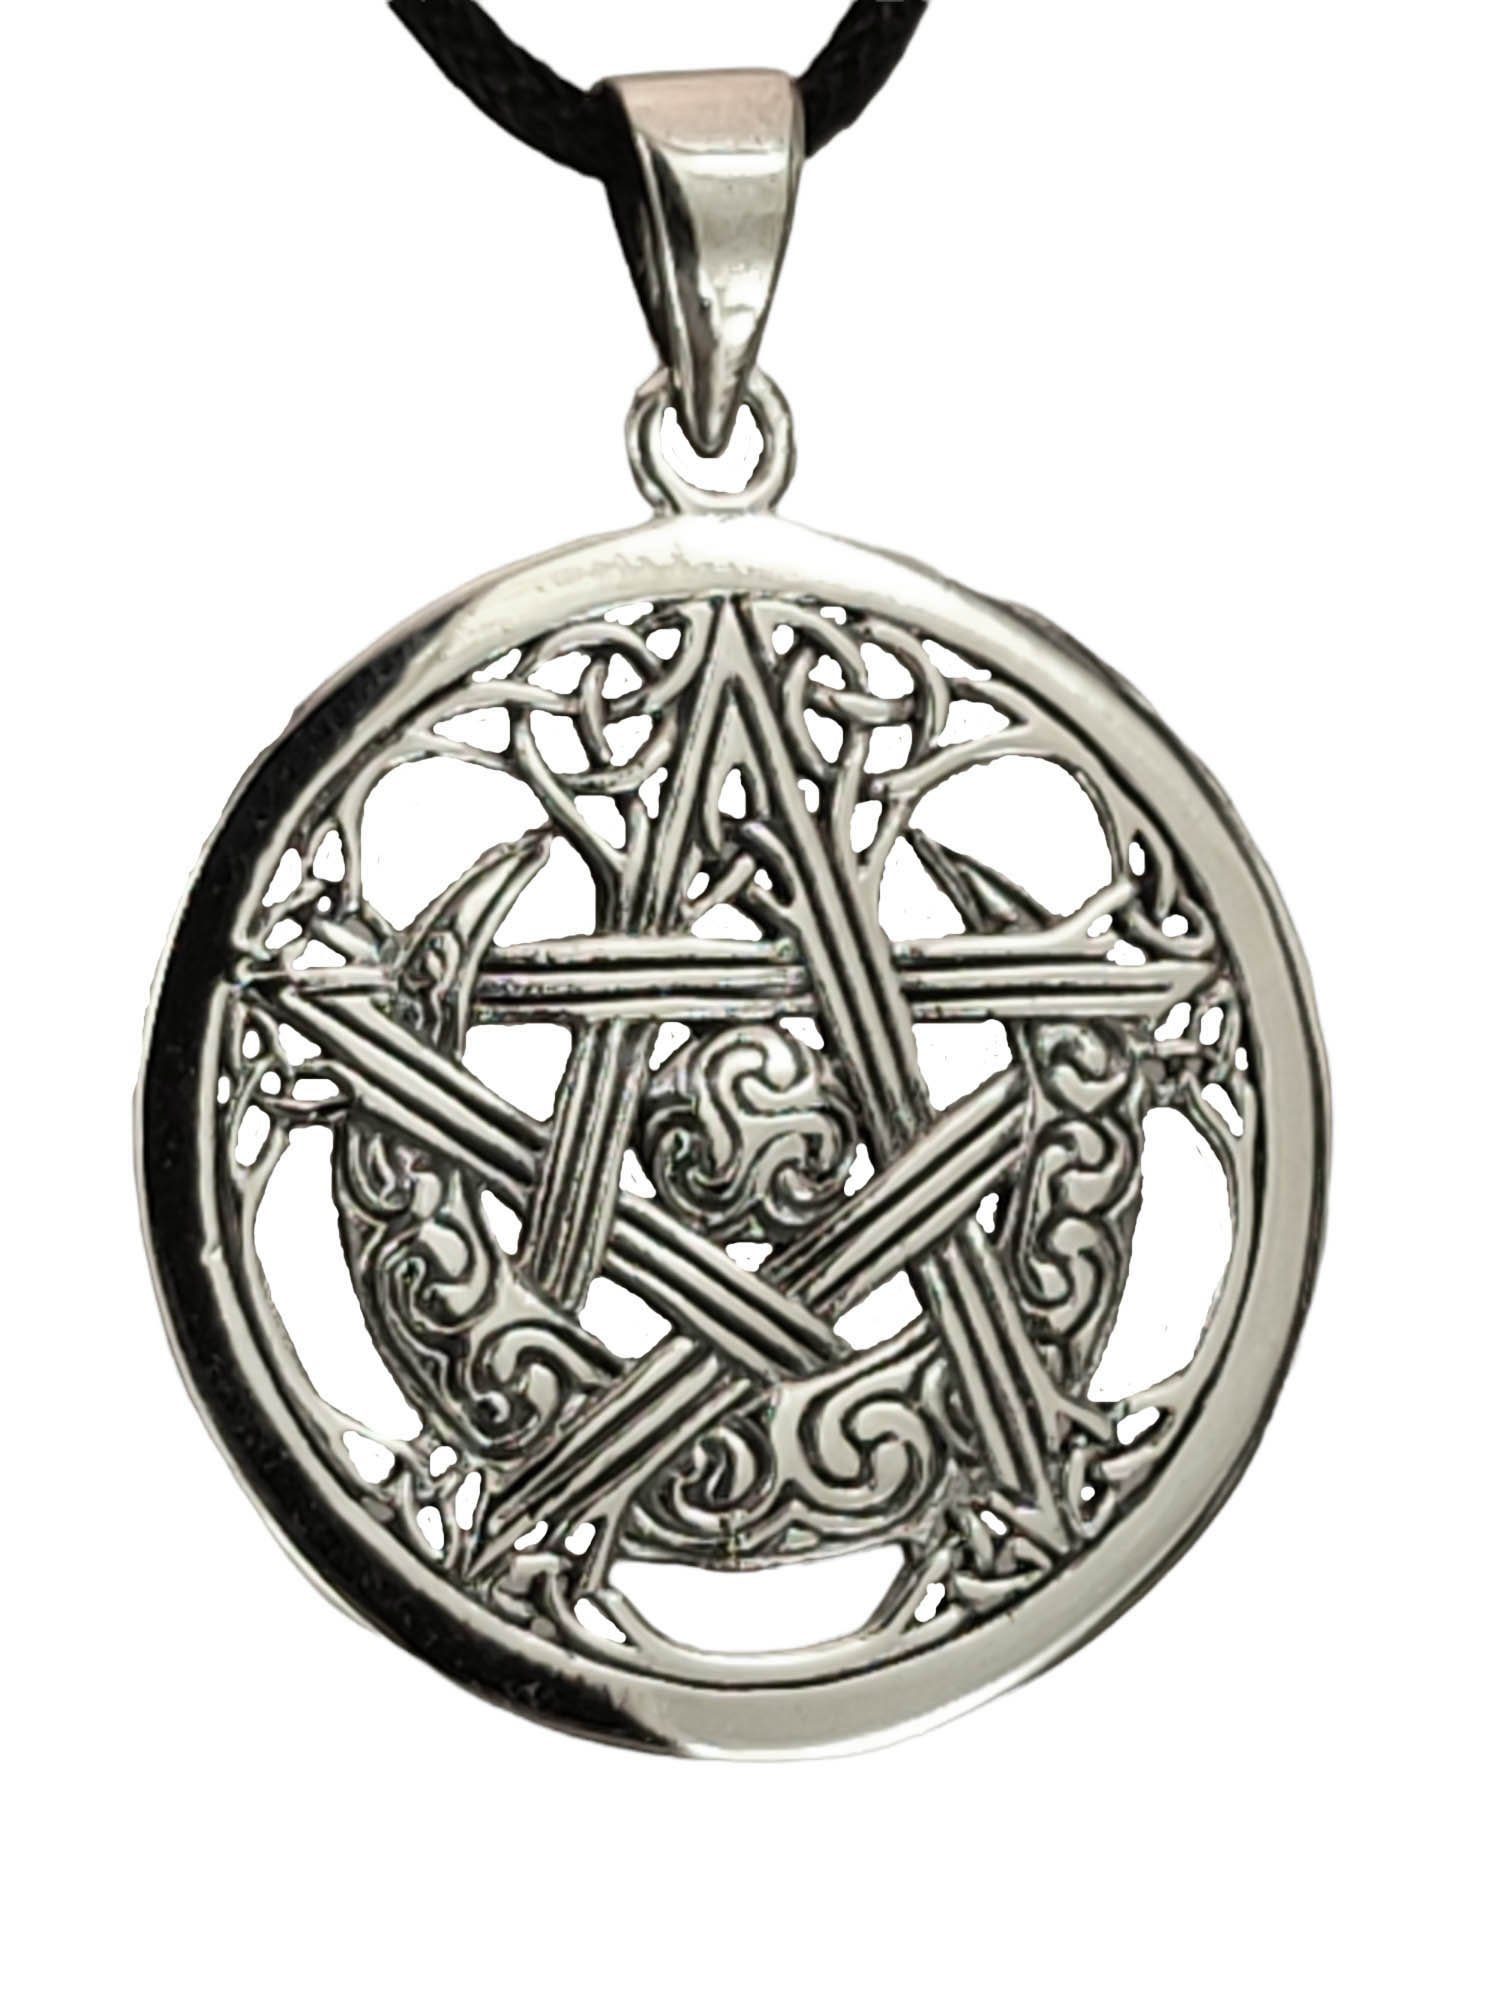 Wicca Leather Amulett Mond Silber 925 Sonne keltisch Kiss Pentagramm of Anhänger Kettenanhänger Schutz